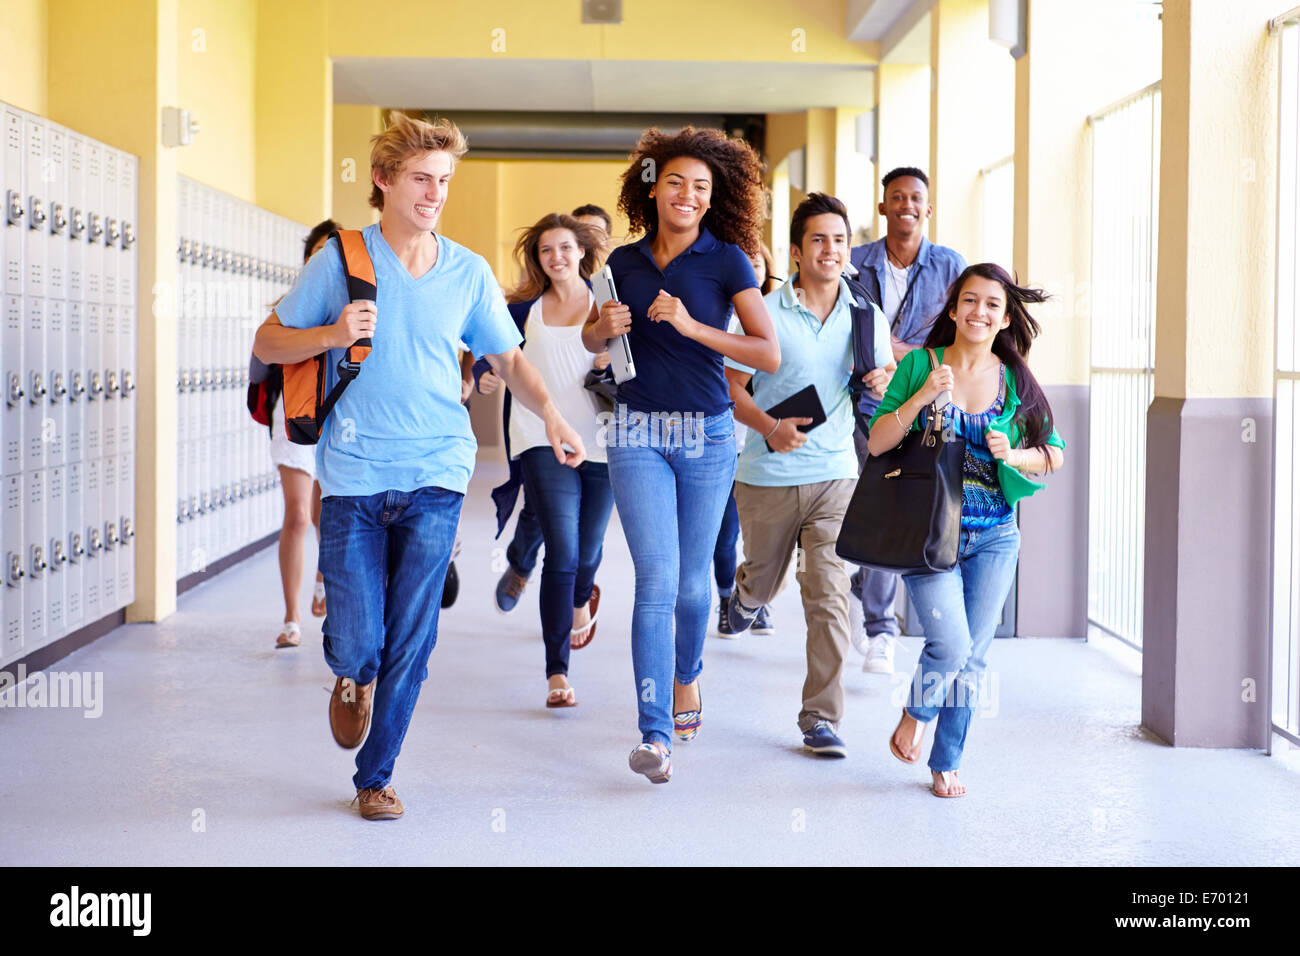 Group Of High School Students Running In Corridor Stock Photo